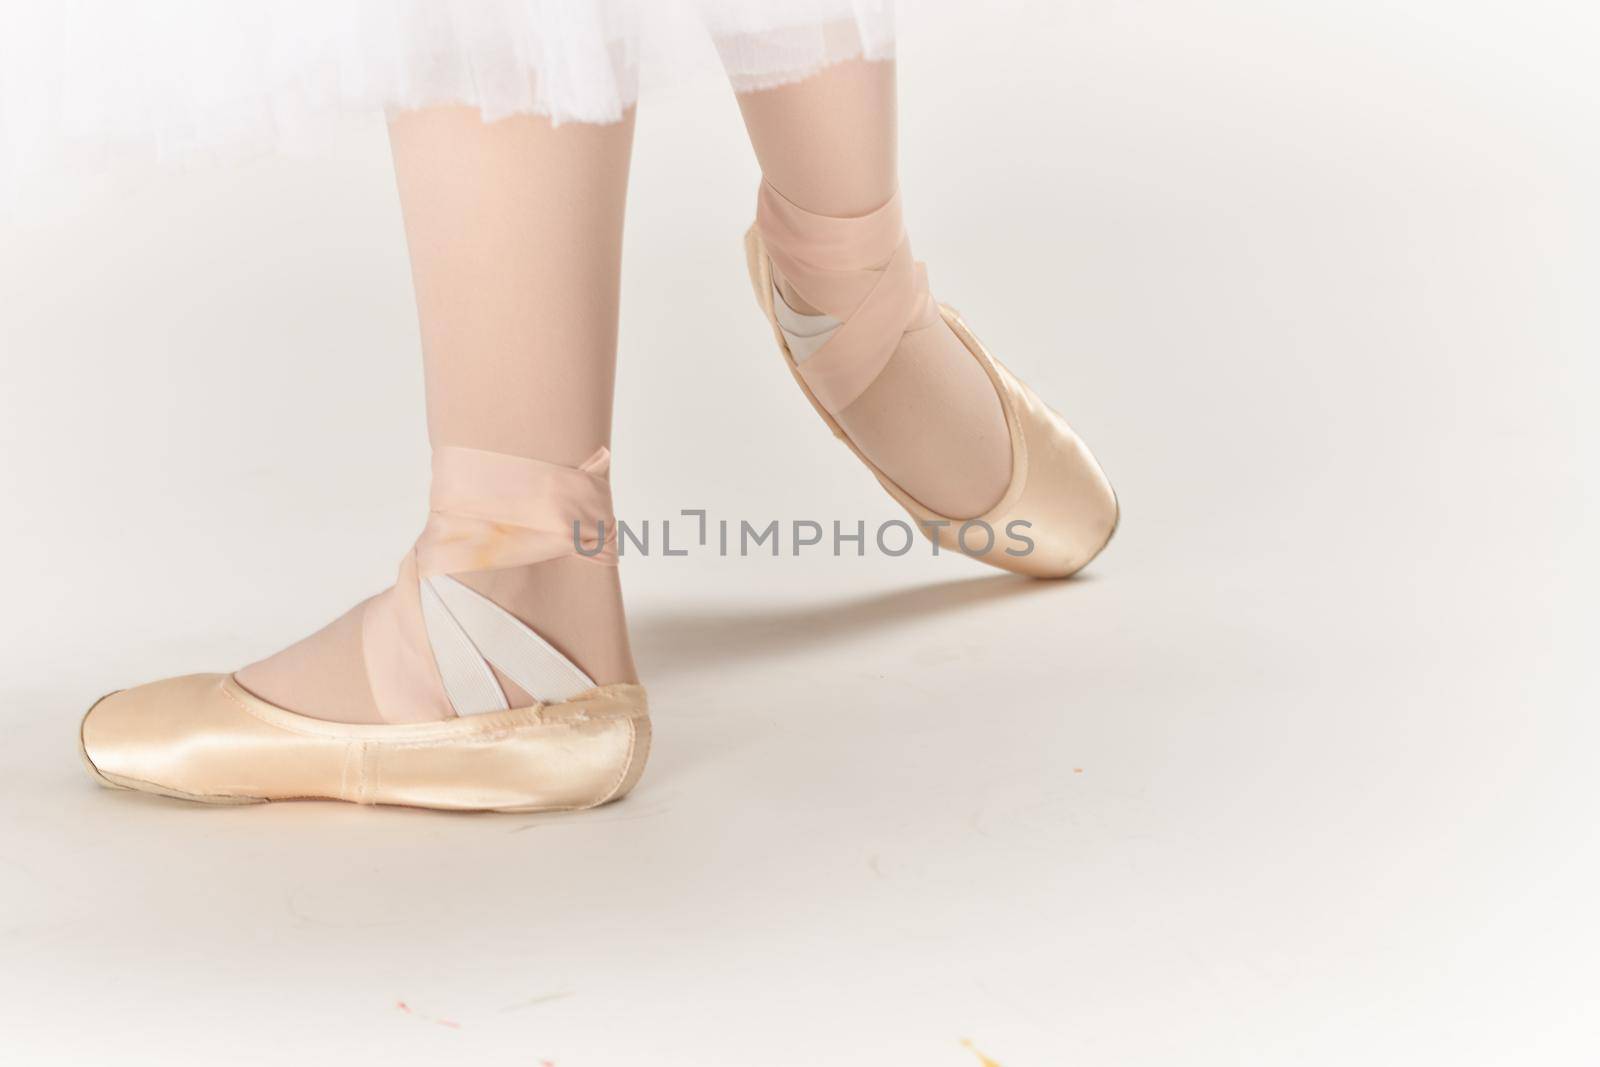 ballerina feet silhouette of a woman performance grace studio lifestyle by Vichizh